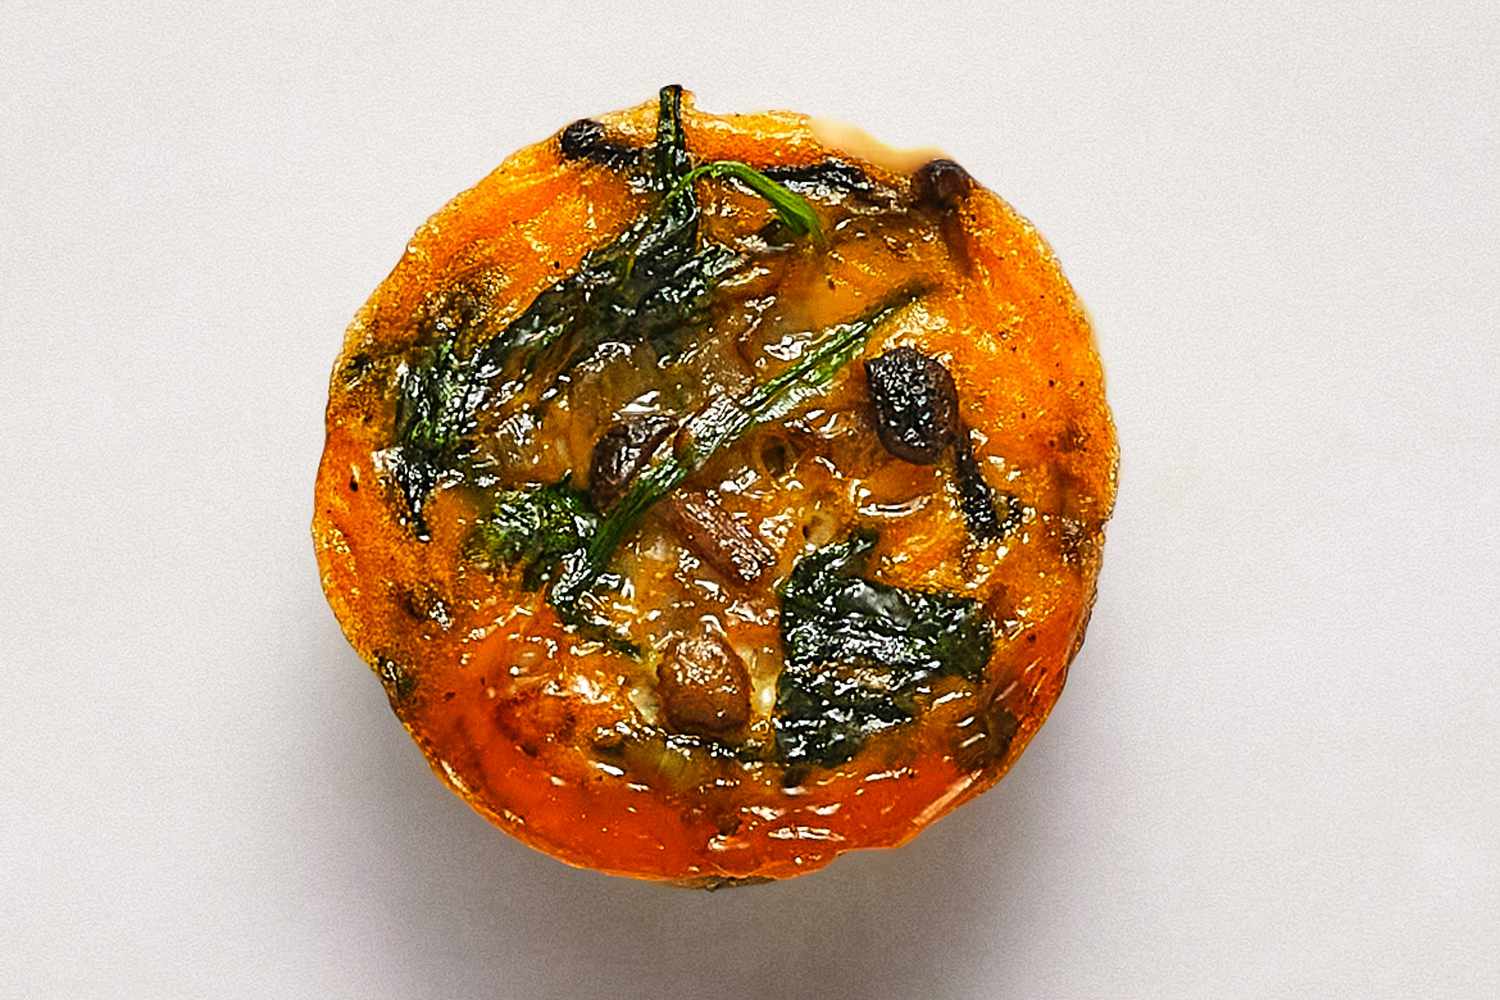 Mushroom and Spinach Egg Bites